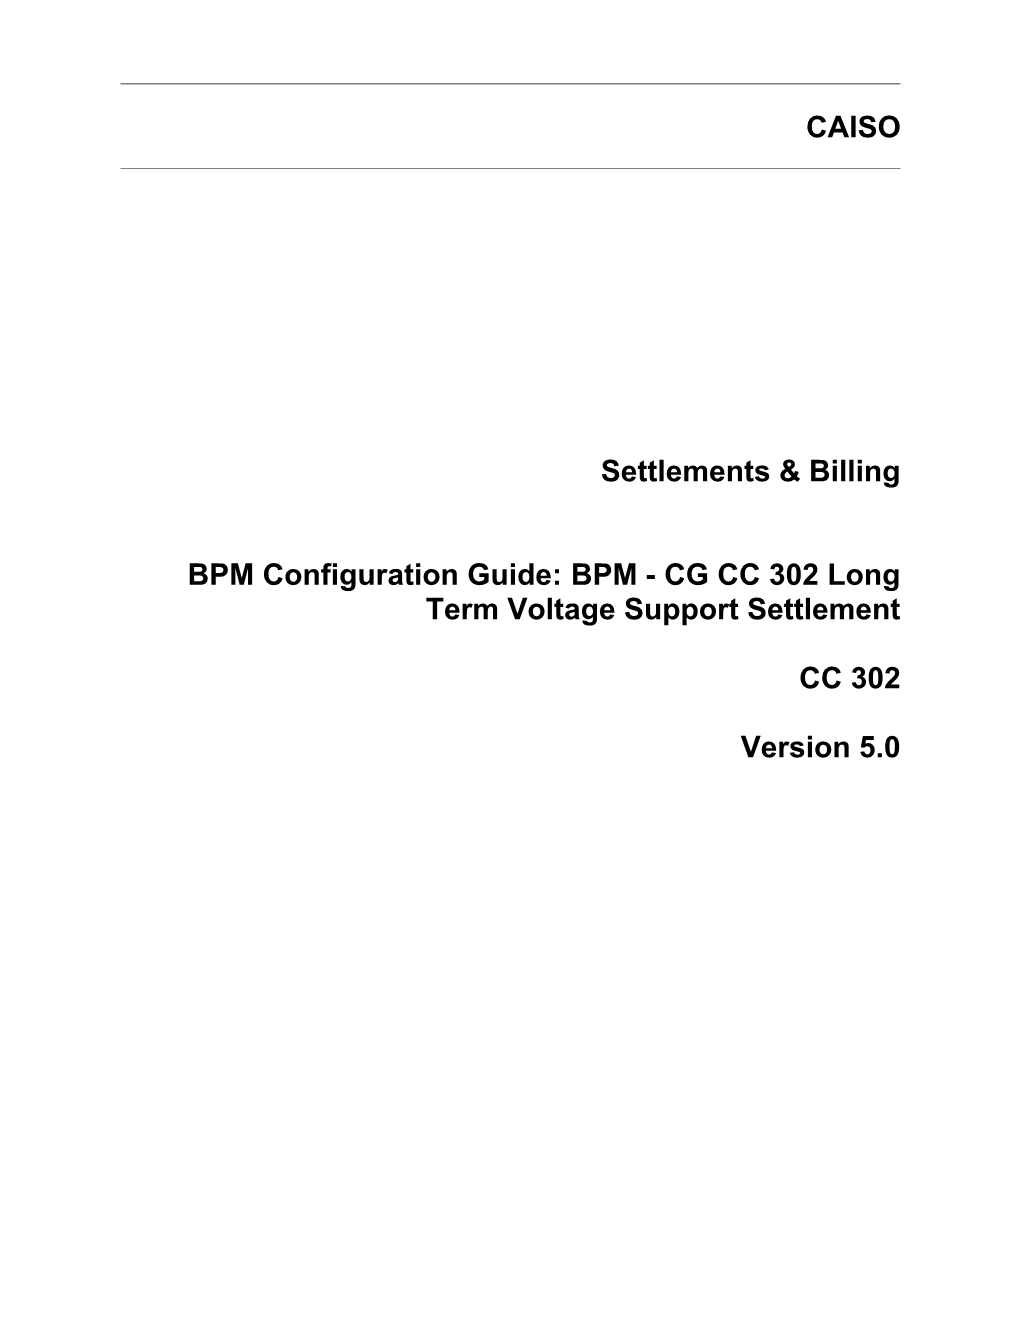 BPM - CG CC 302 Long Term Voltage Support Settlement